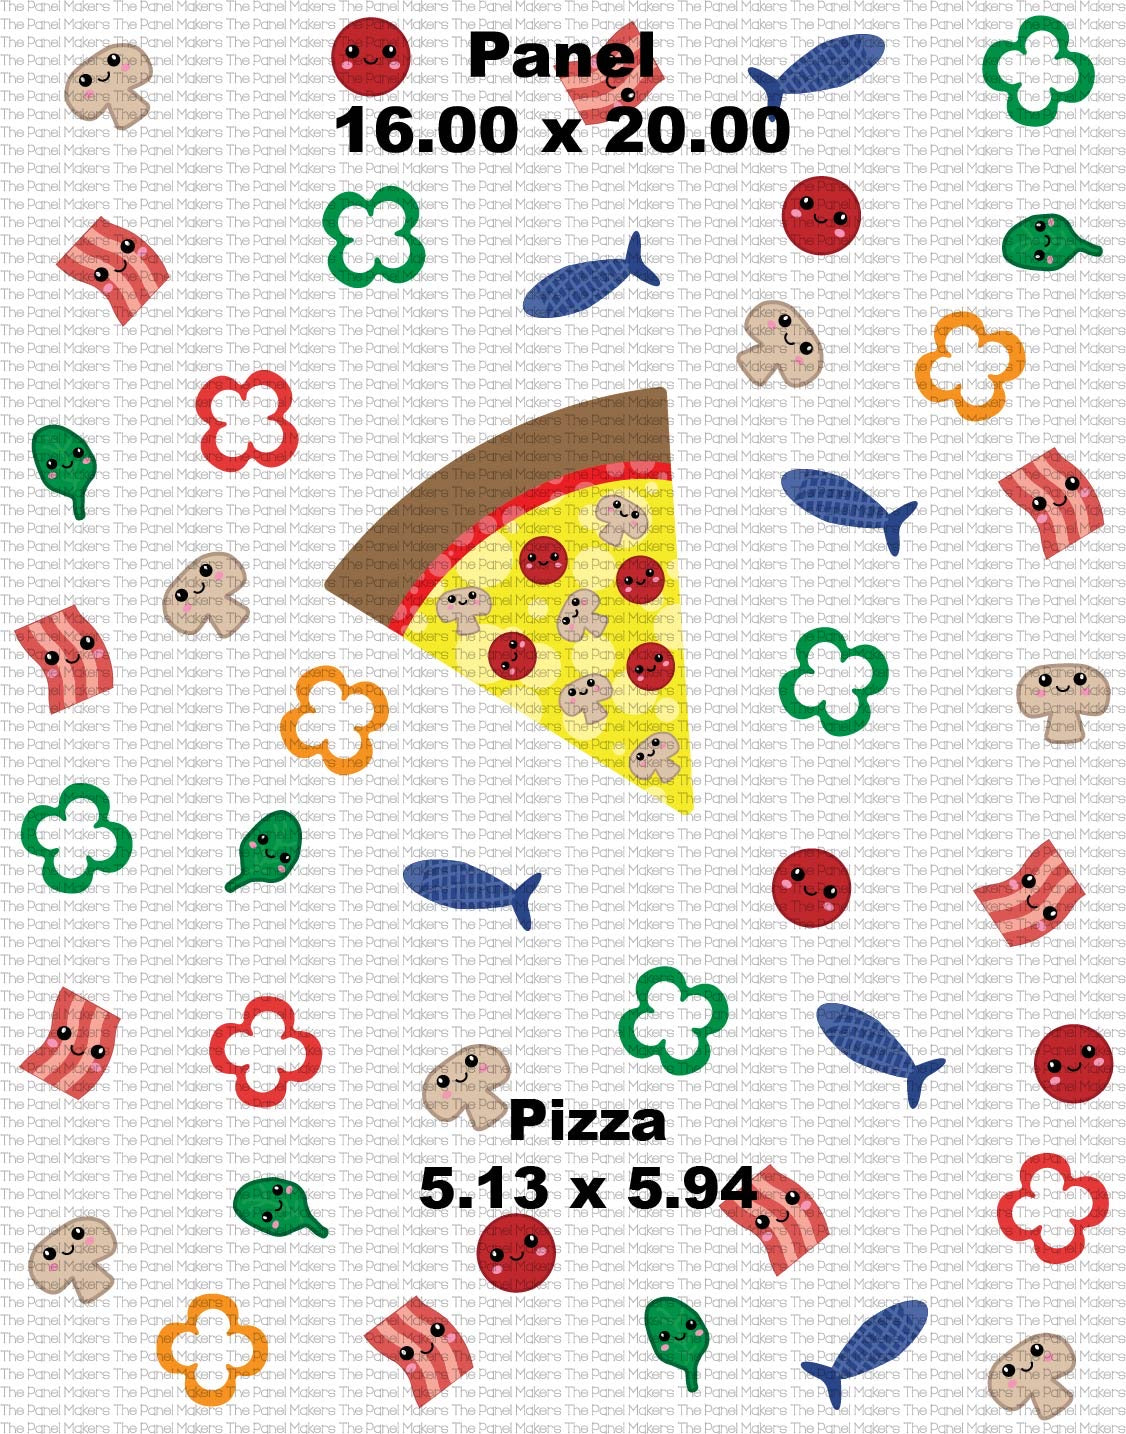 Pizza Slice large panel